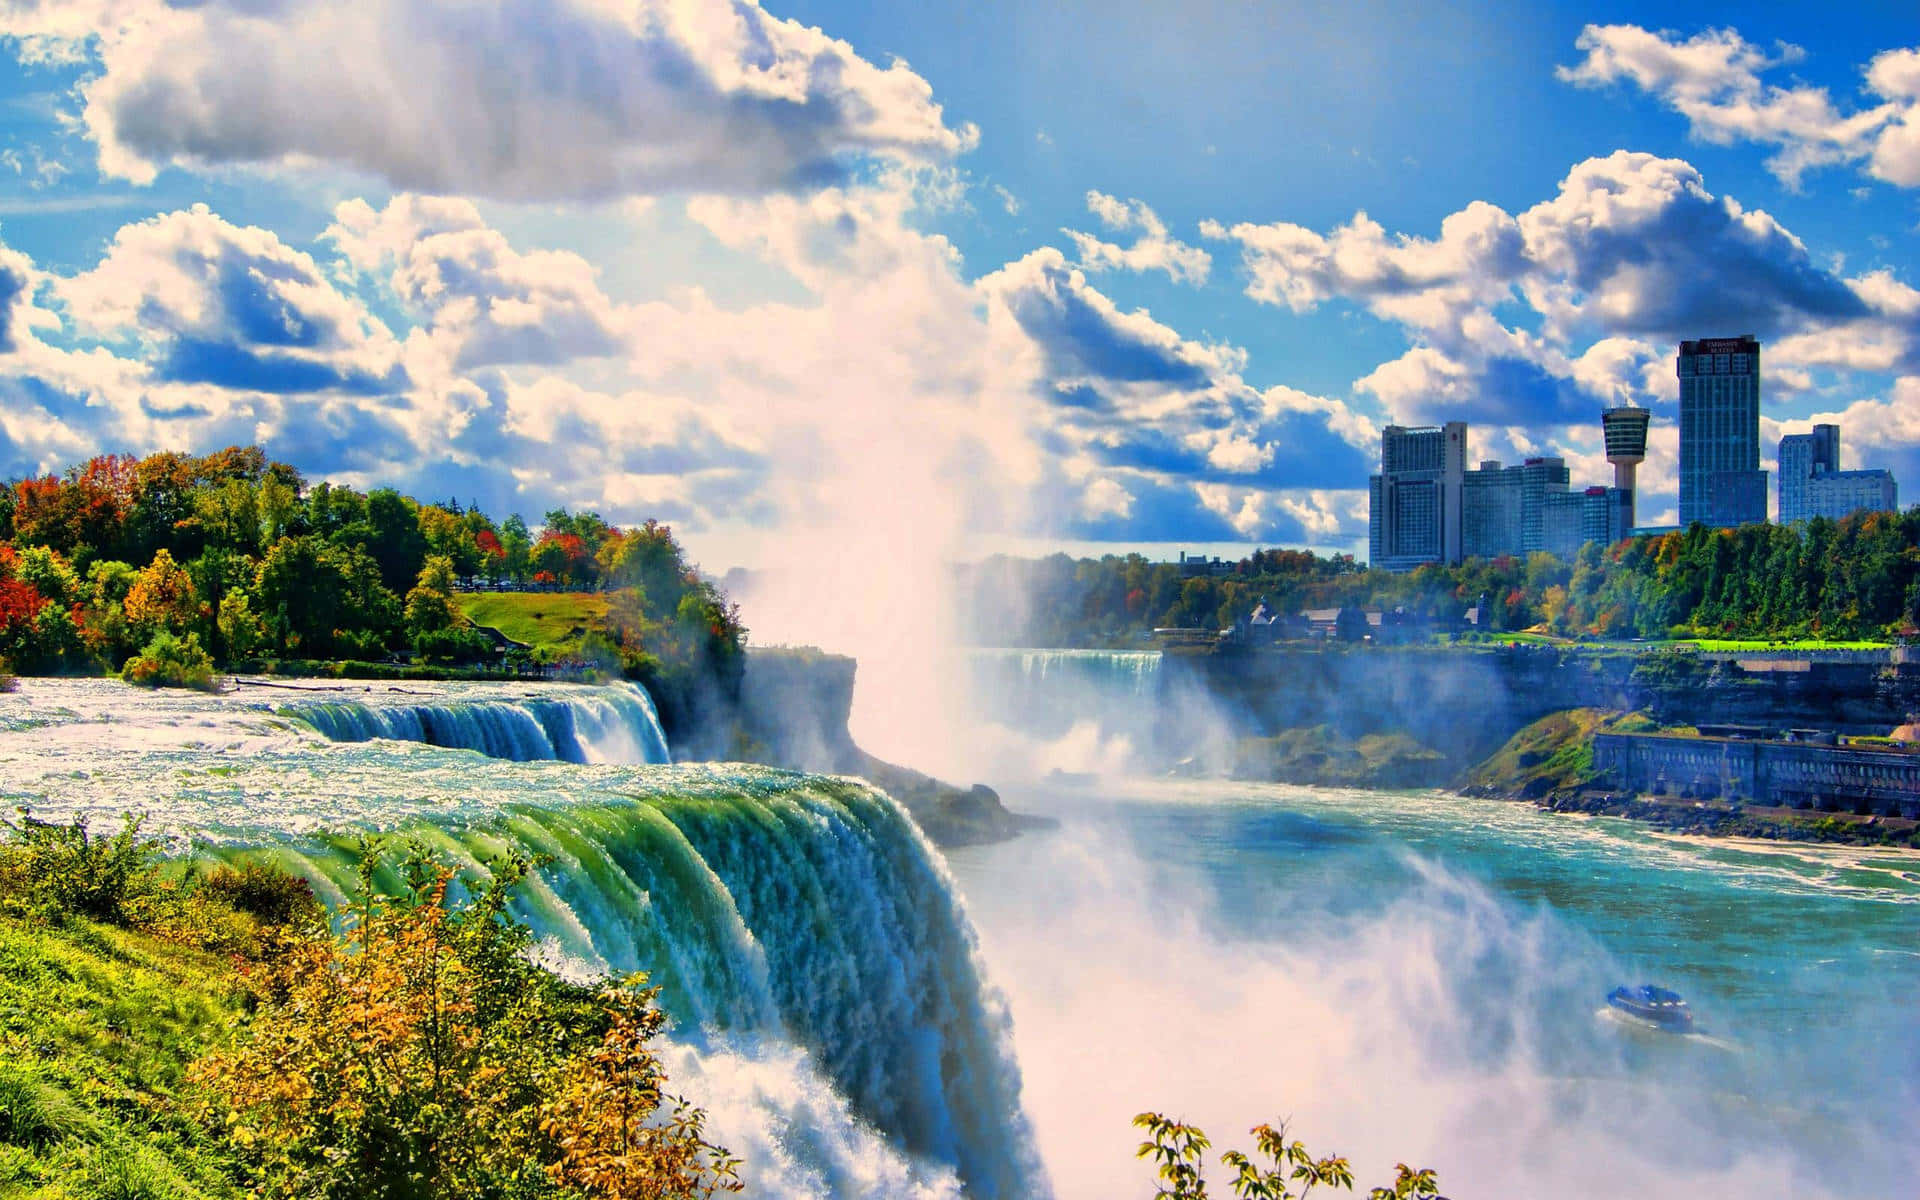 Views of the magnificient Niagara Falls